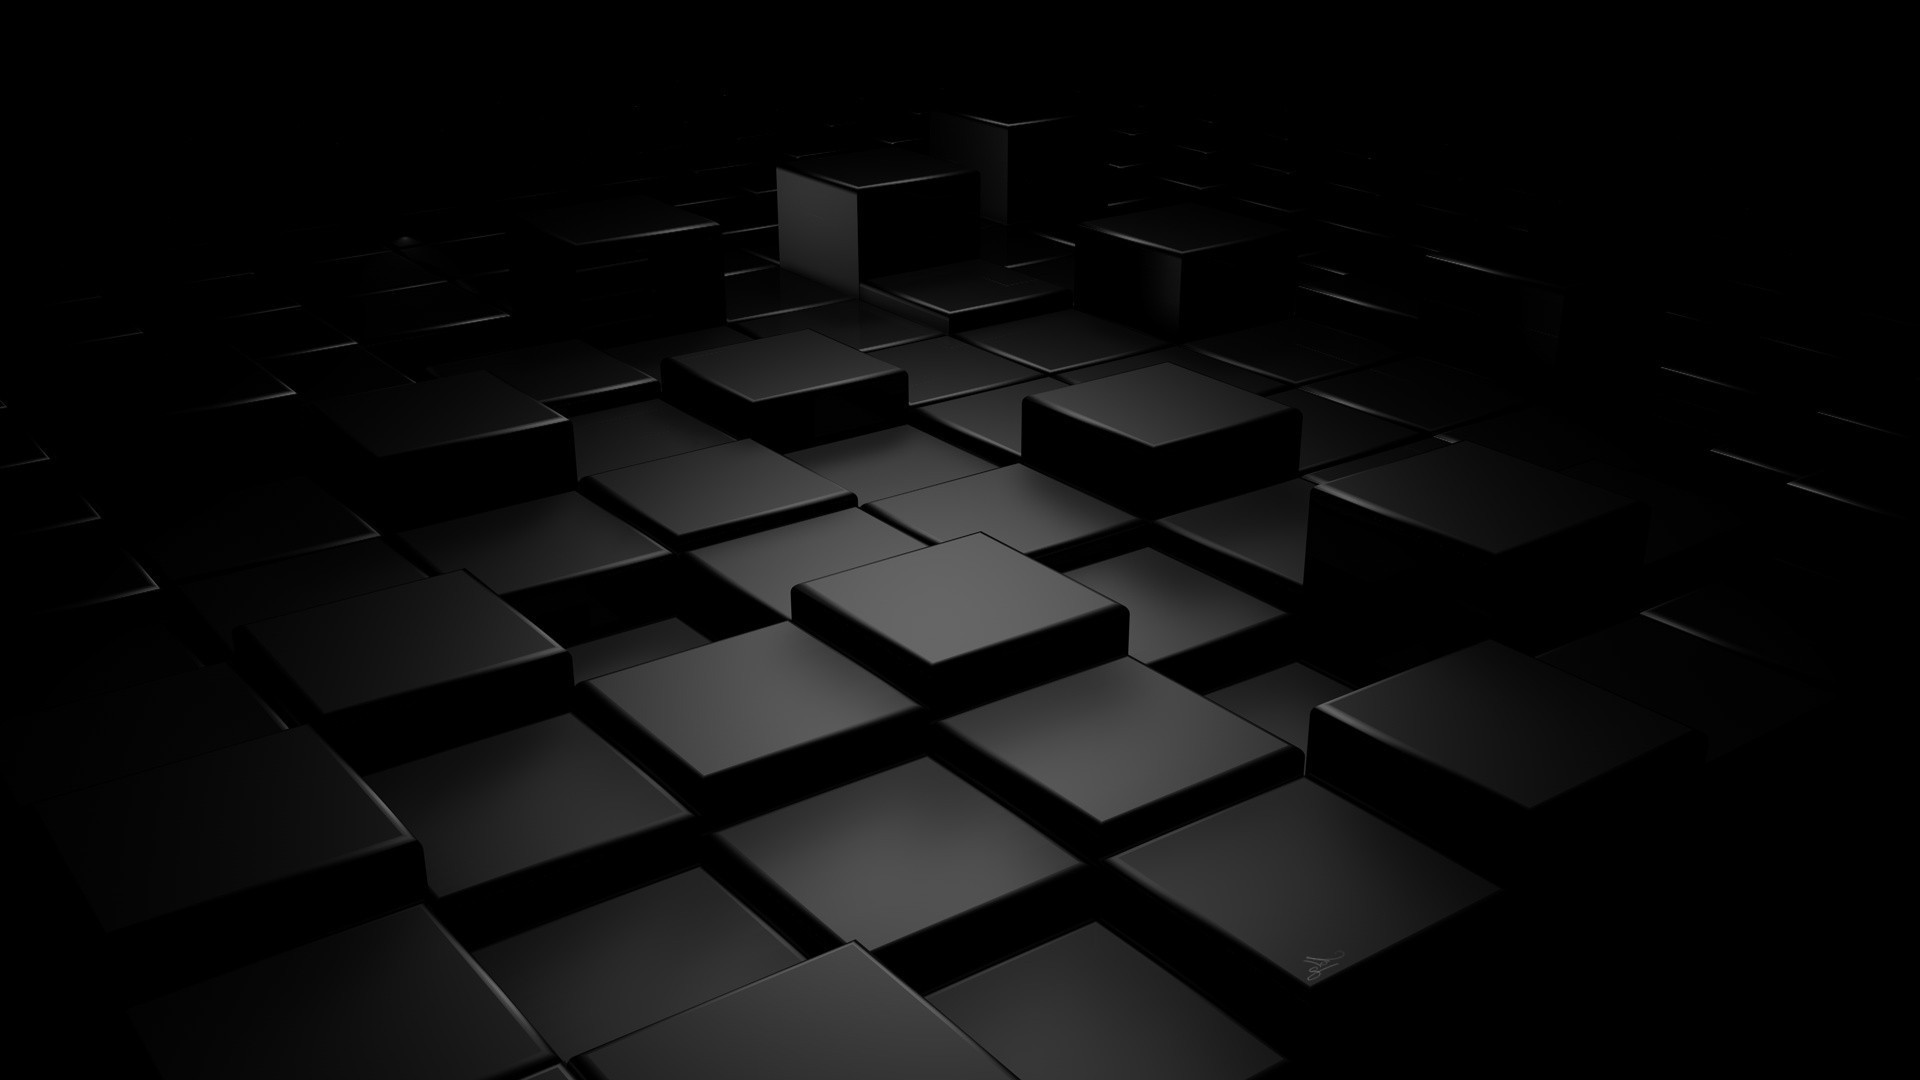  Black  Wallpapers  Free Download PixelsTalk Net